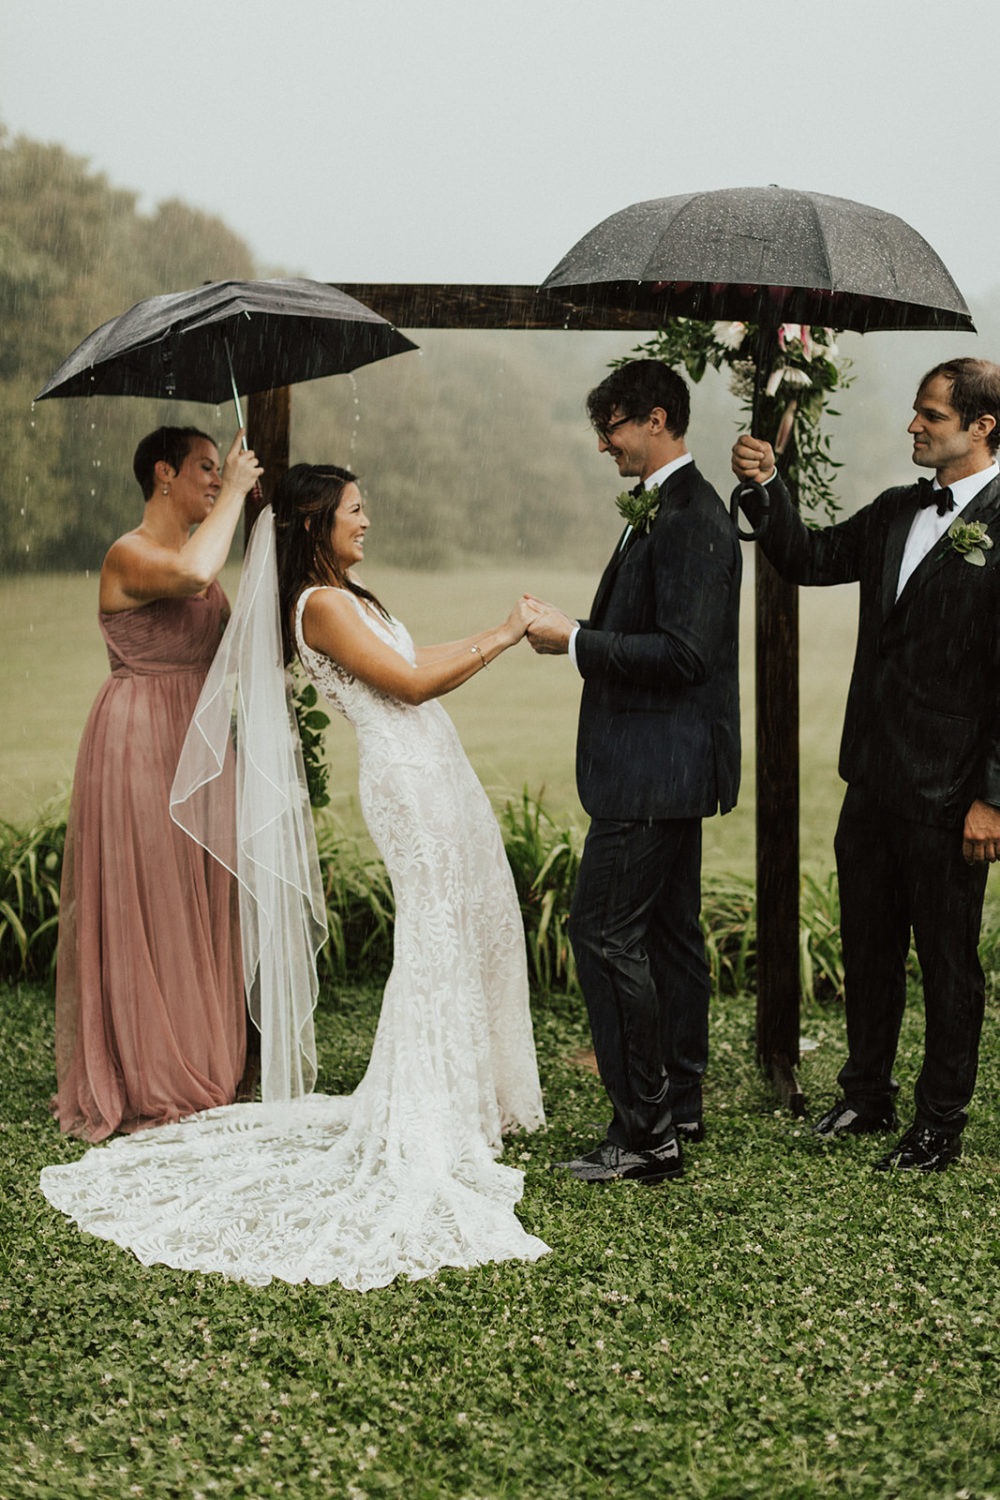 Couple exchanges vows under umbrellas at rainy wedding day